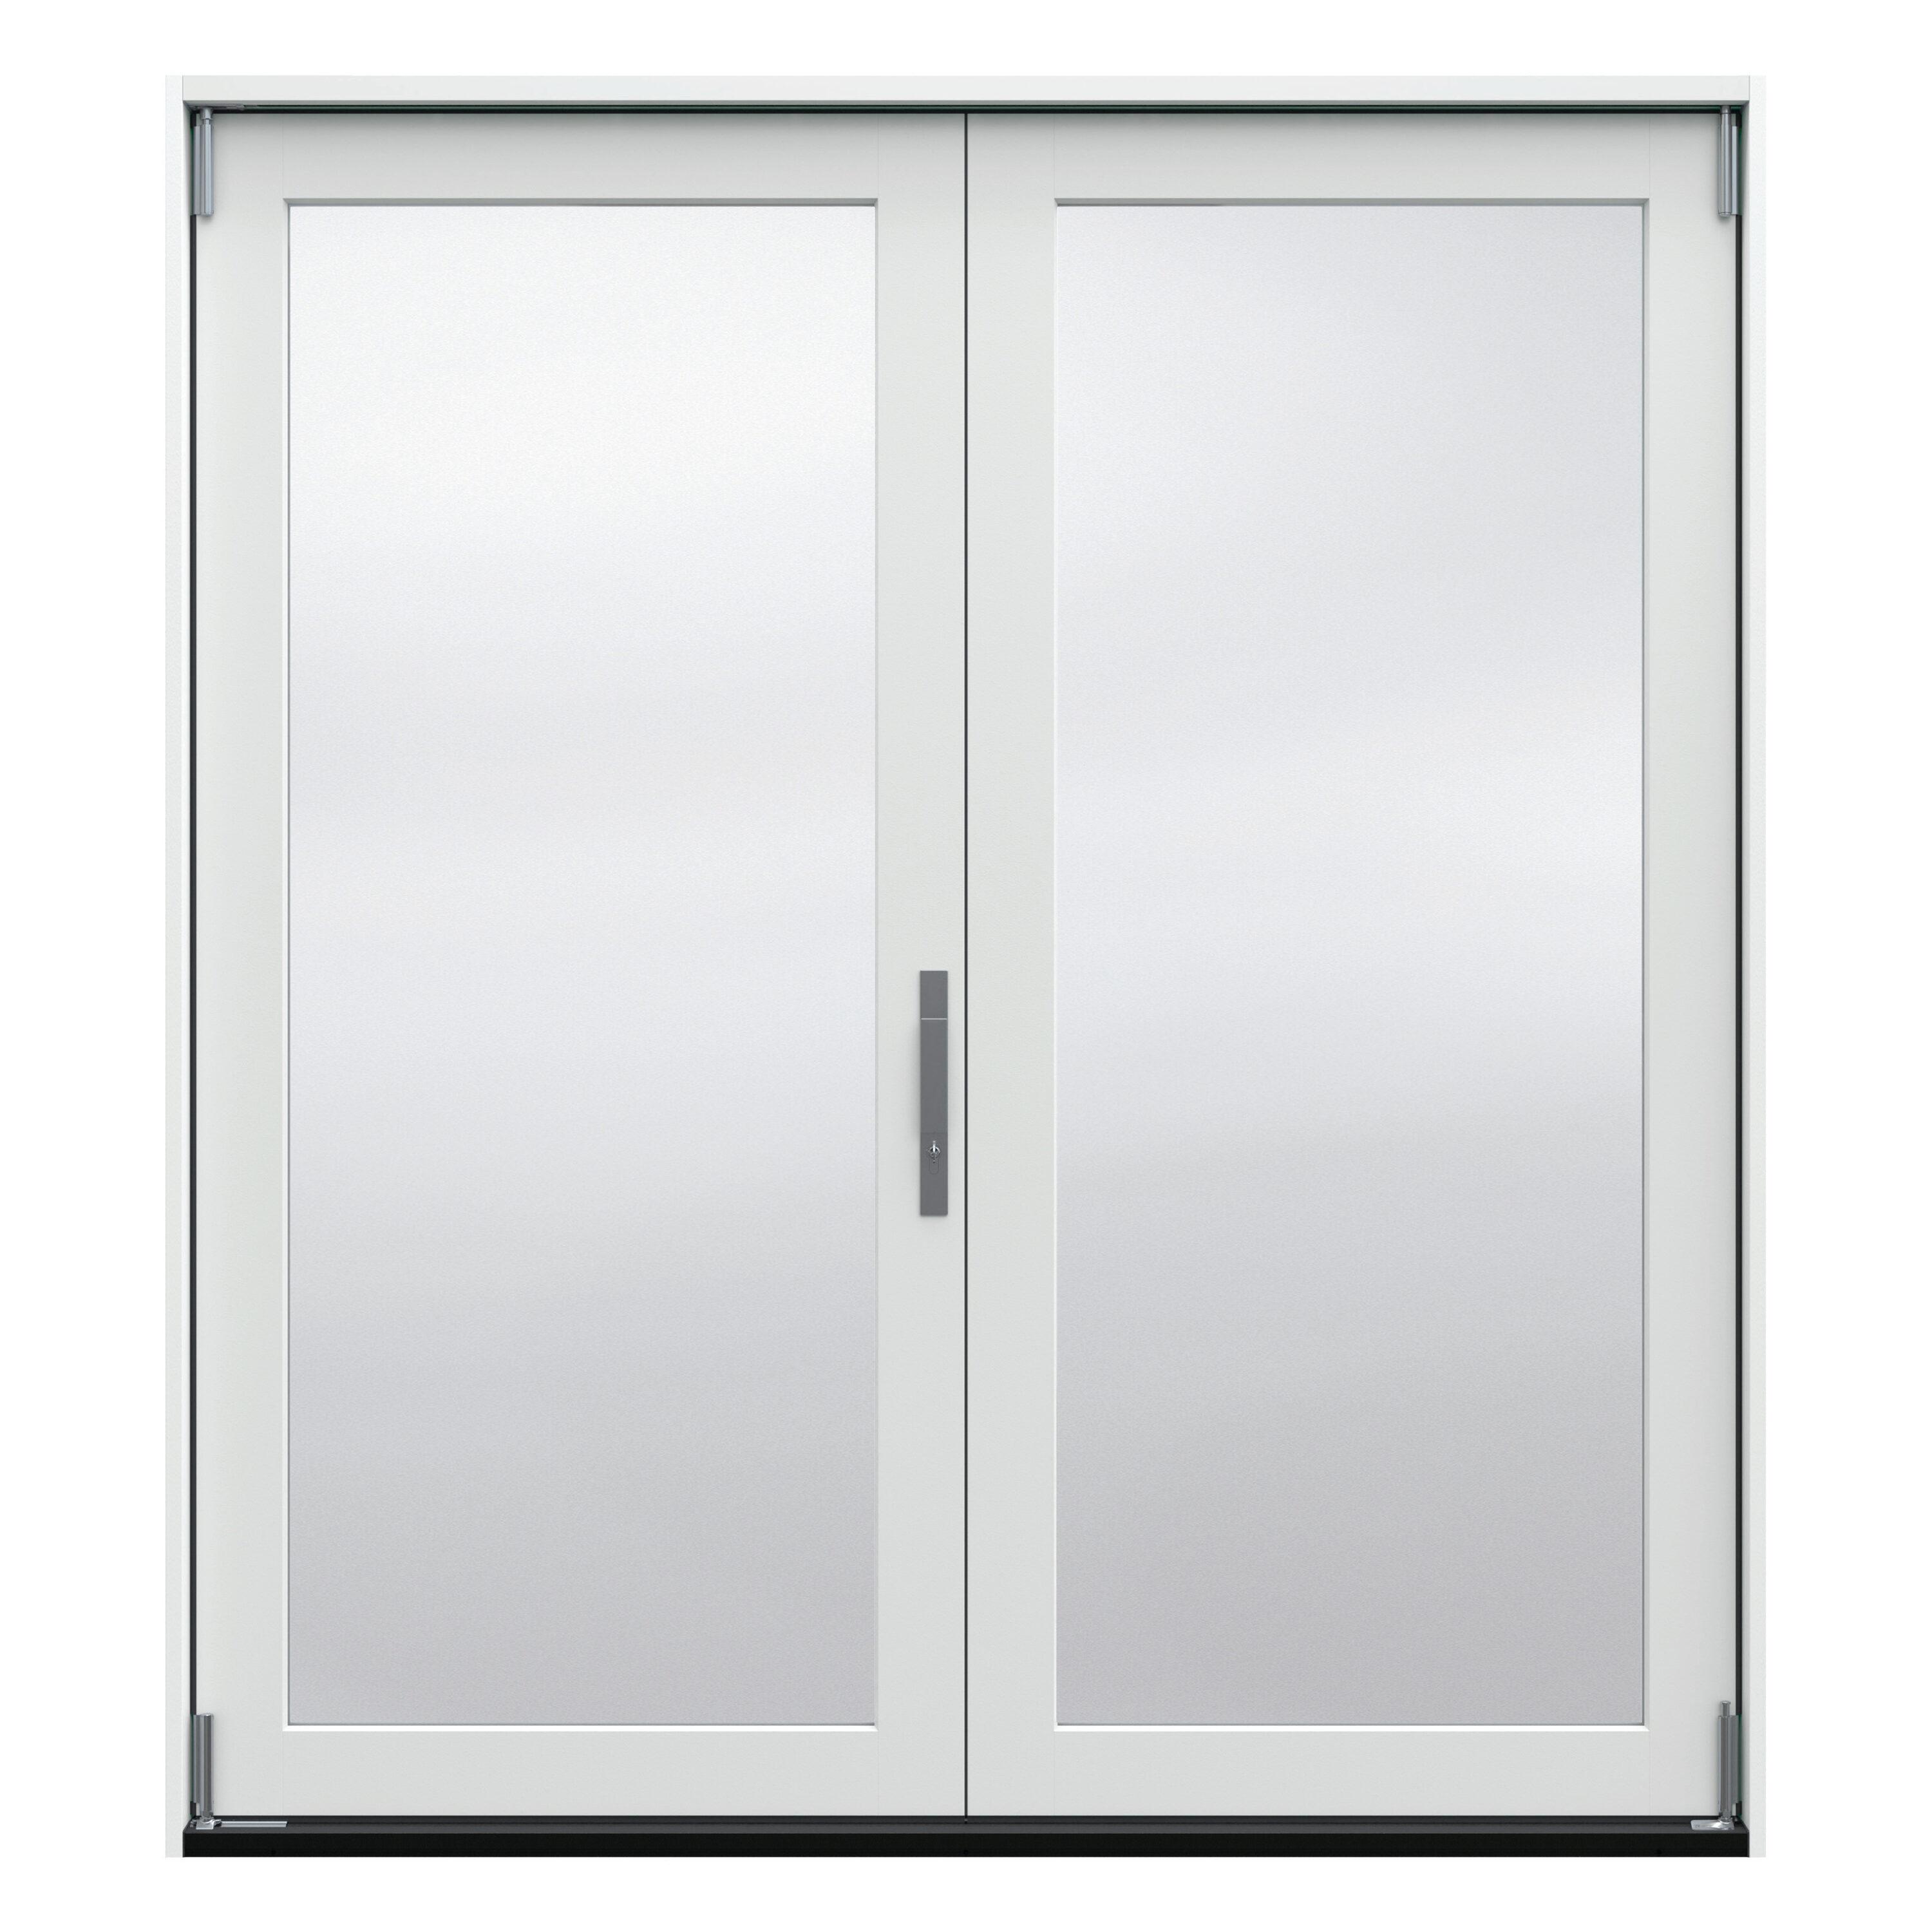 Image result for sizes of PGT french doors  Double closet doors, Double  patio doors, Double sliding doors